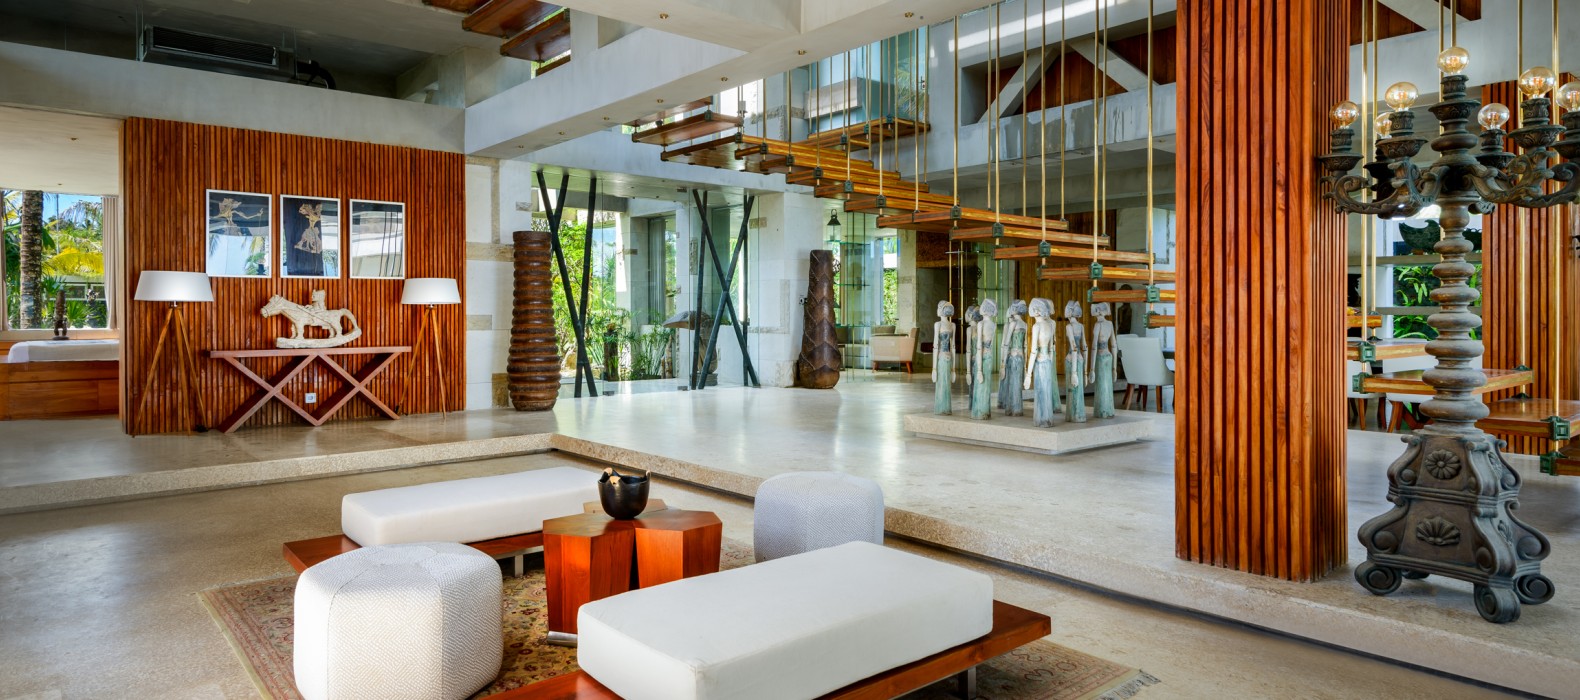 Living room of Villa La Vela in Bali